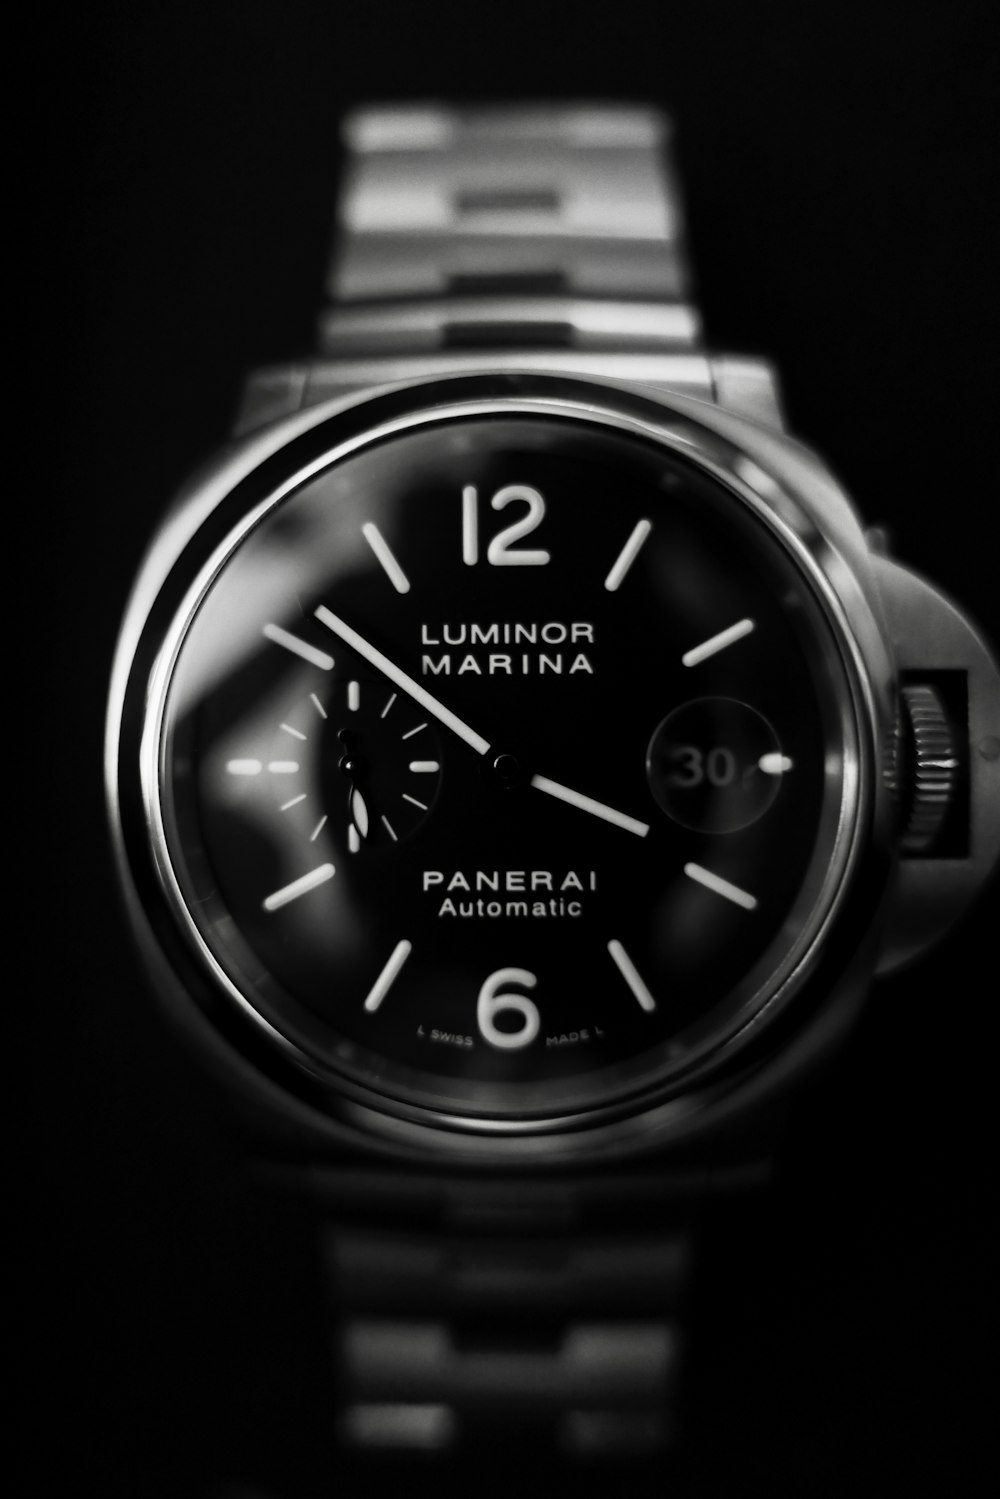 grayscale photography of round Luminor Marina Panerai chronograph watch